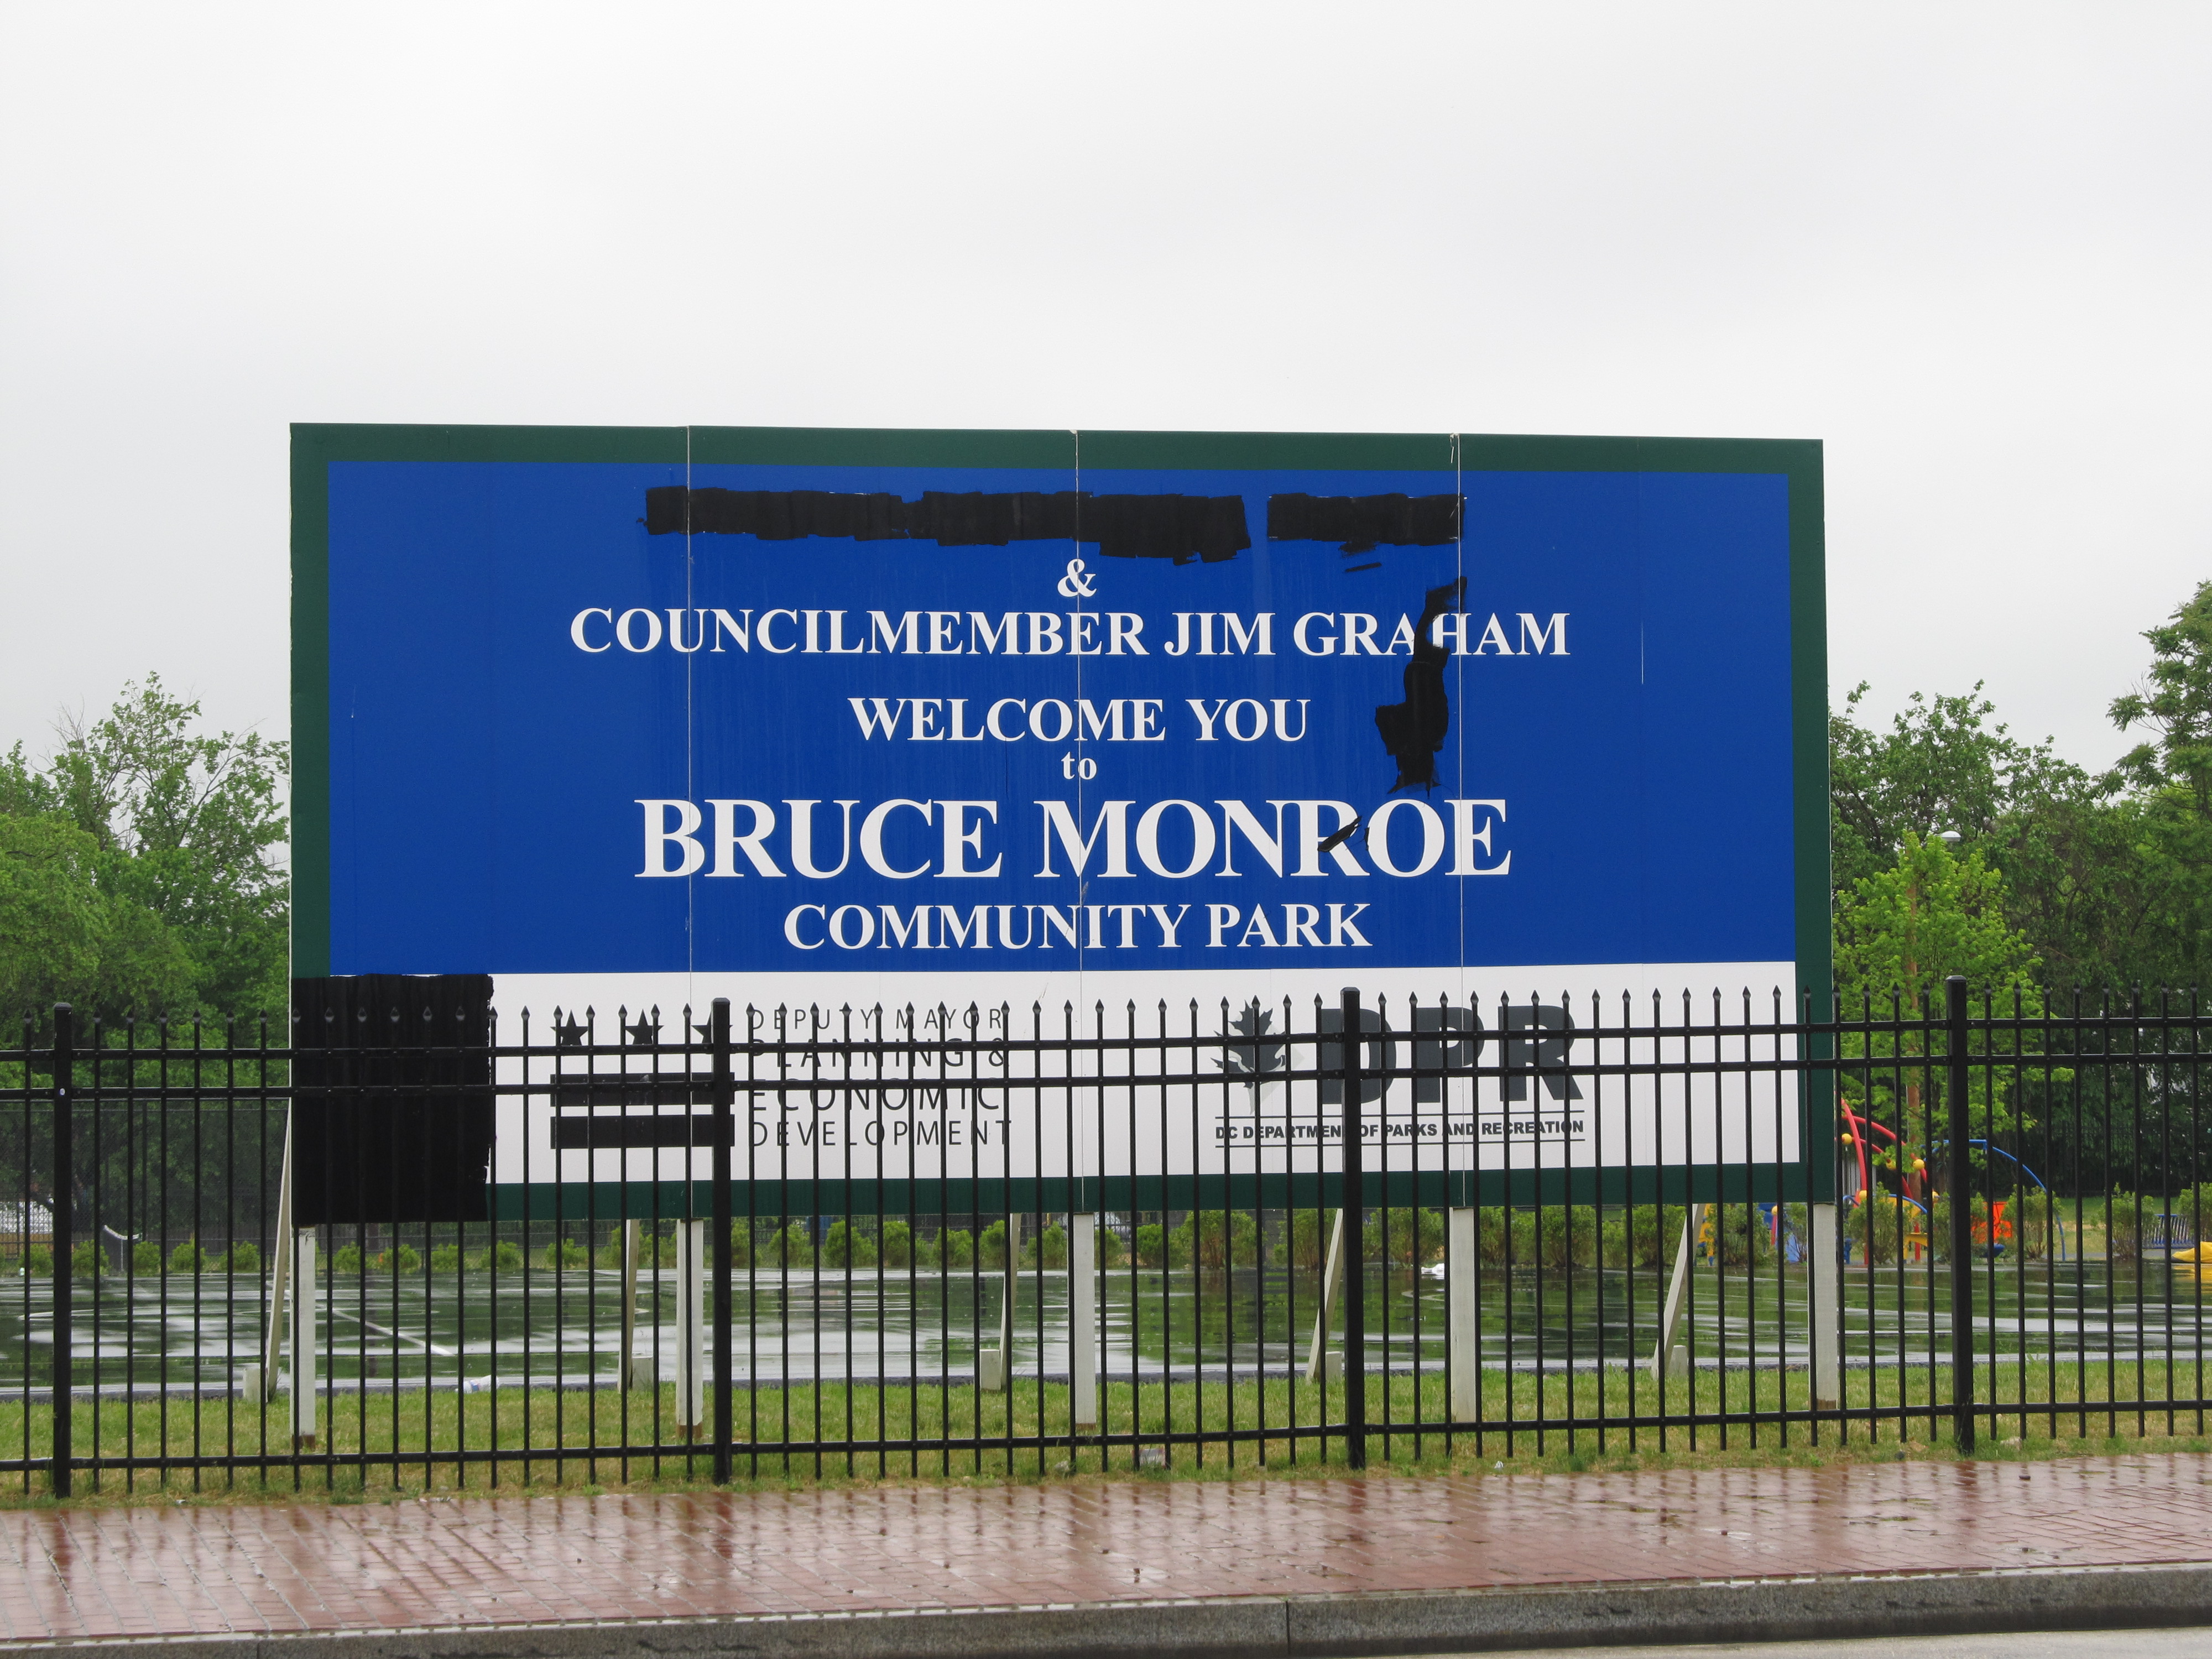 Bruce Monroe